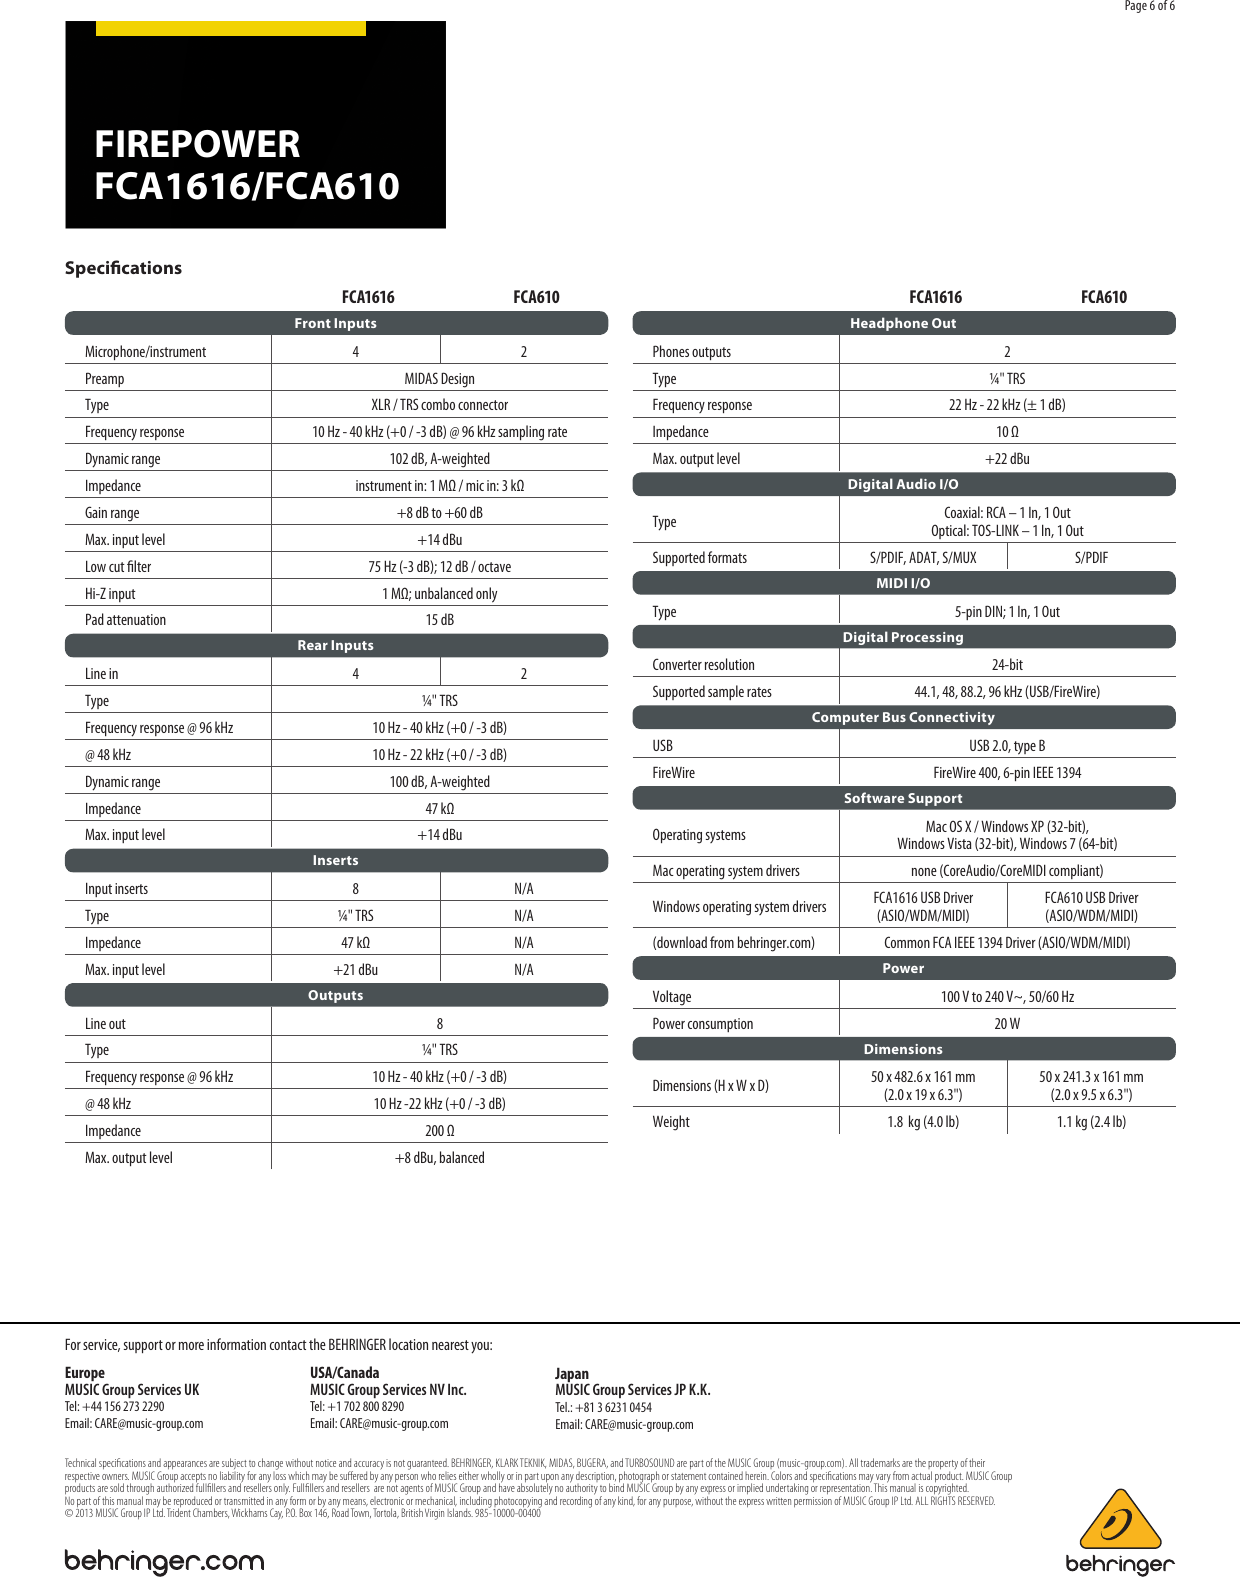 Page 6 of 6 - Behringer Behringer-Firepower-Fca1616-Brochure- FIREPOWER FCA1616/FCA610  Behringer-firepower-fca1616-brochure